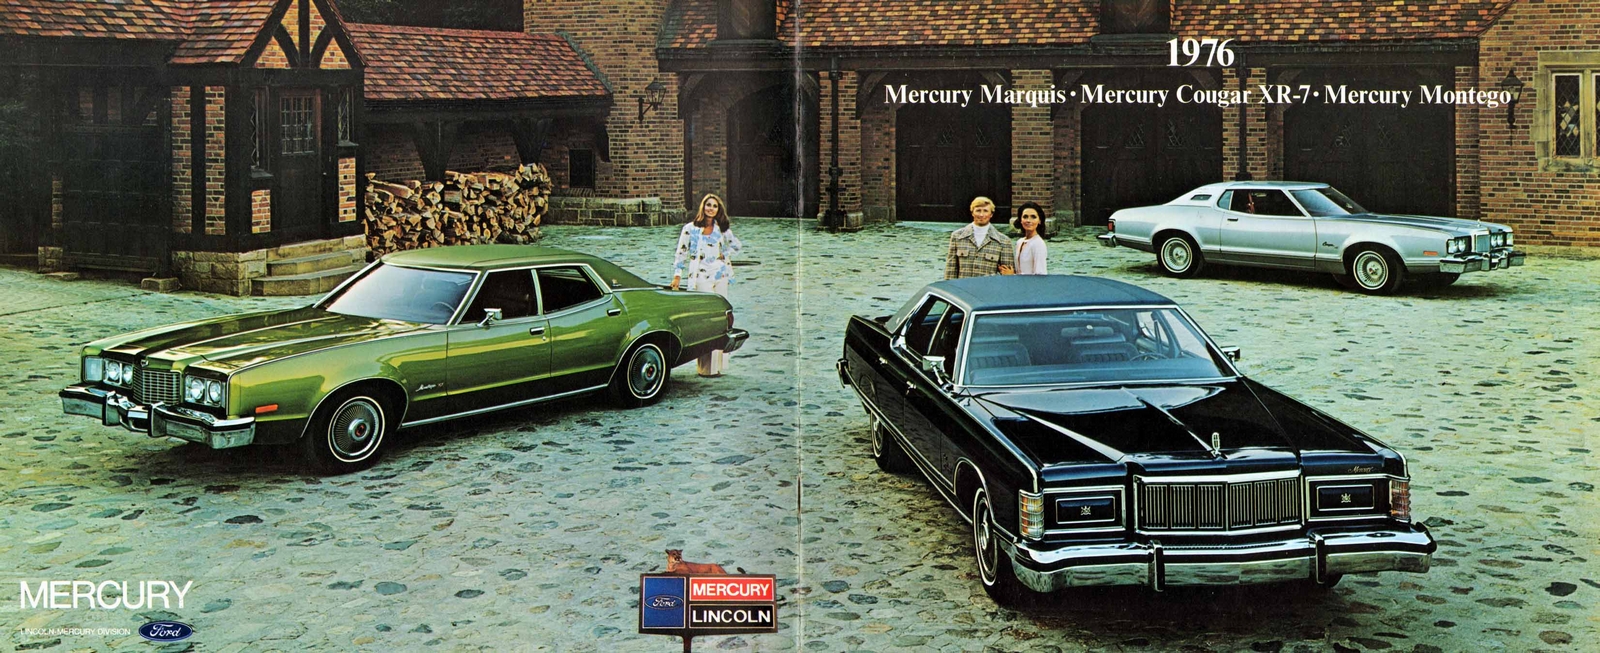 n_1976 Mercury Marquis-Cougar-Montego-20-01.jpg